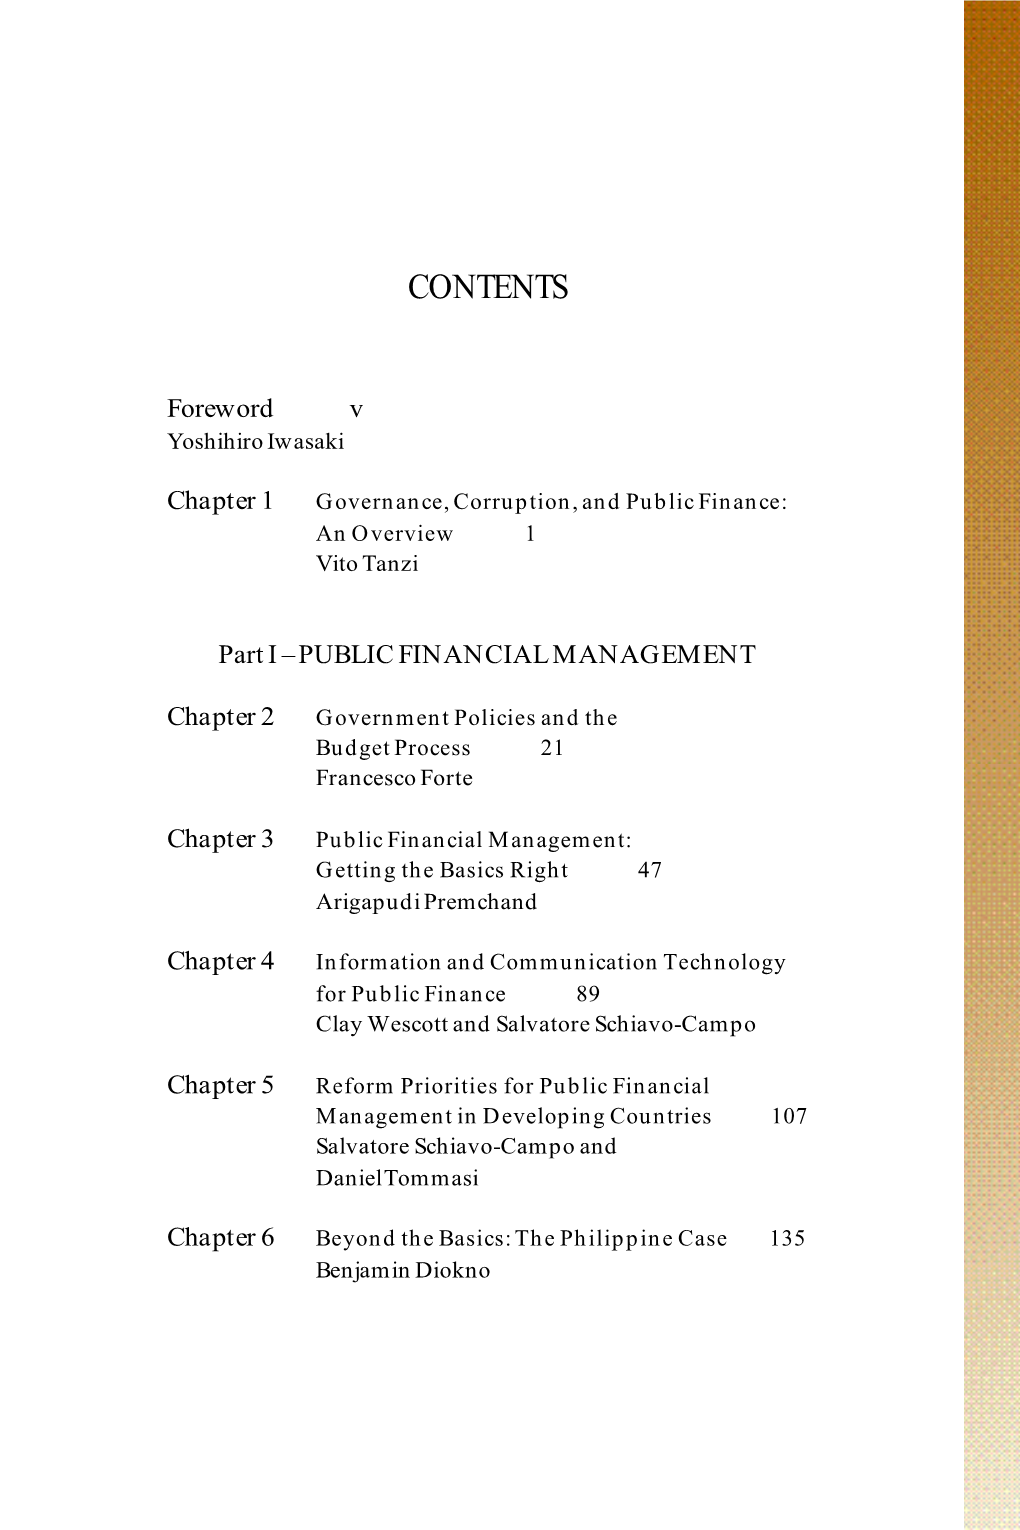 Governance, Corruption and Public Financial Management